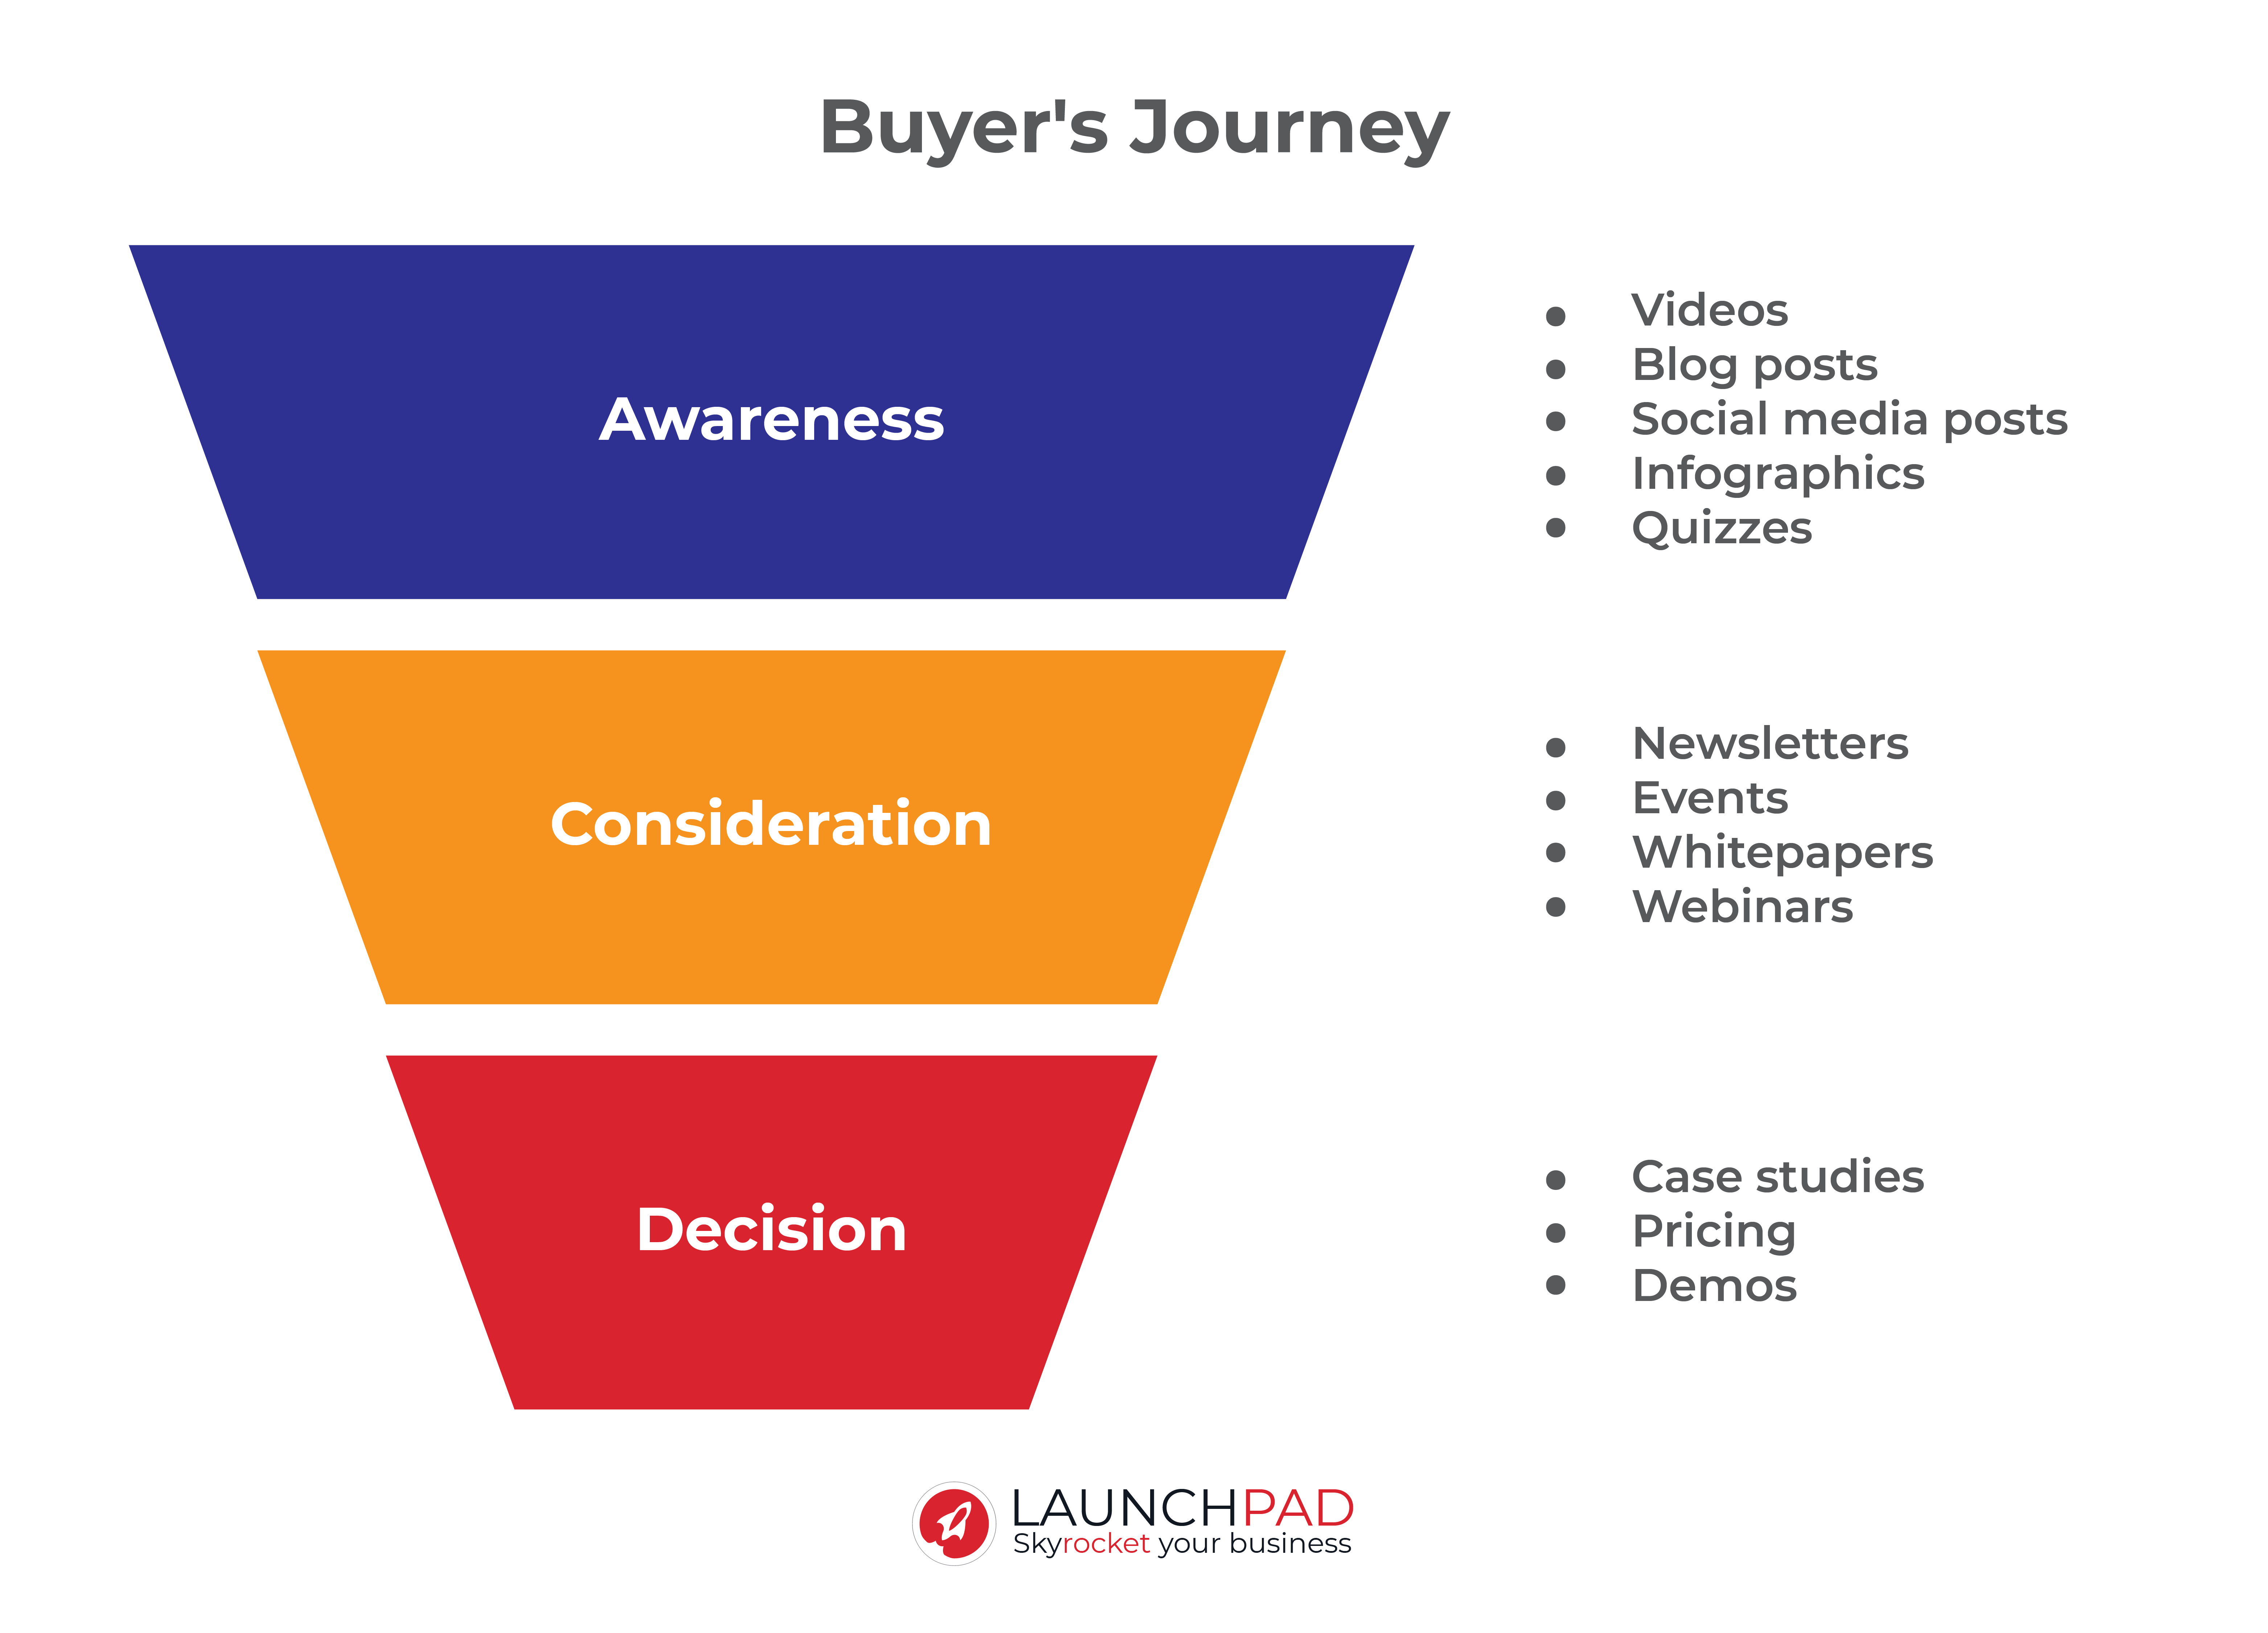 Buyer's journey - Awareness, Consideration, Decision